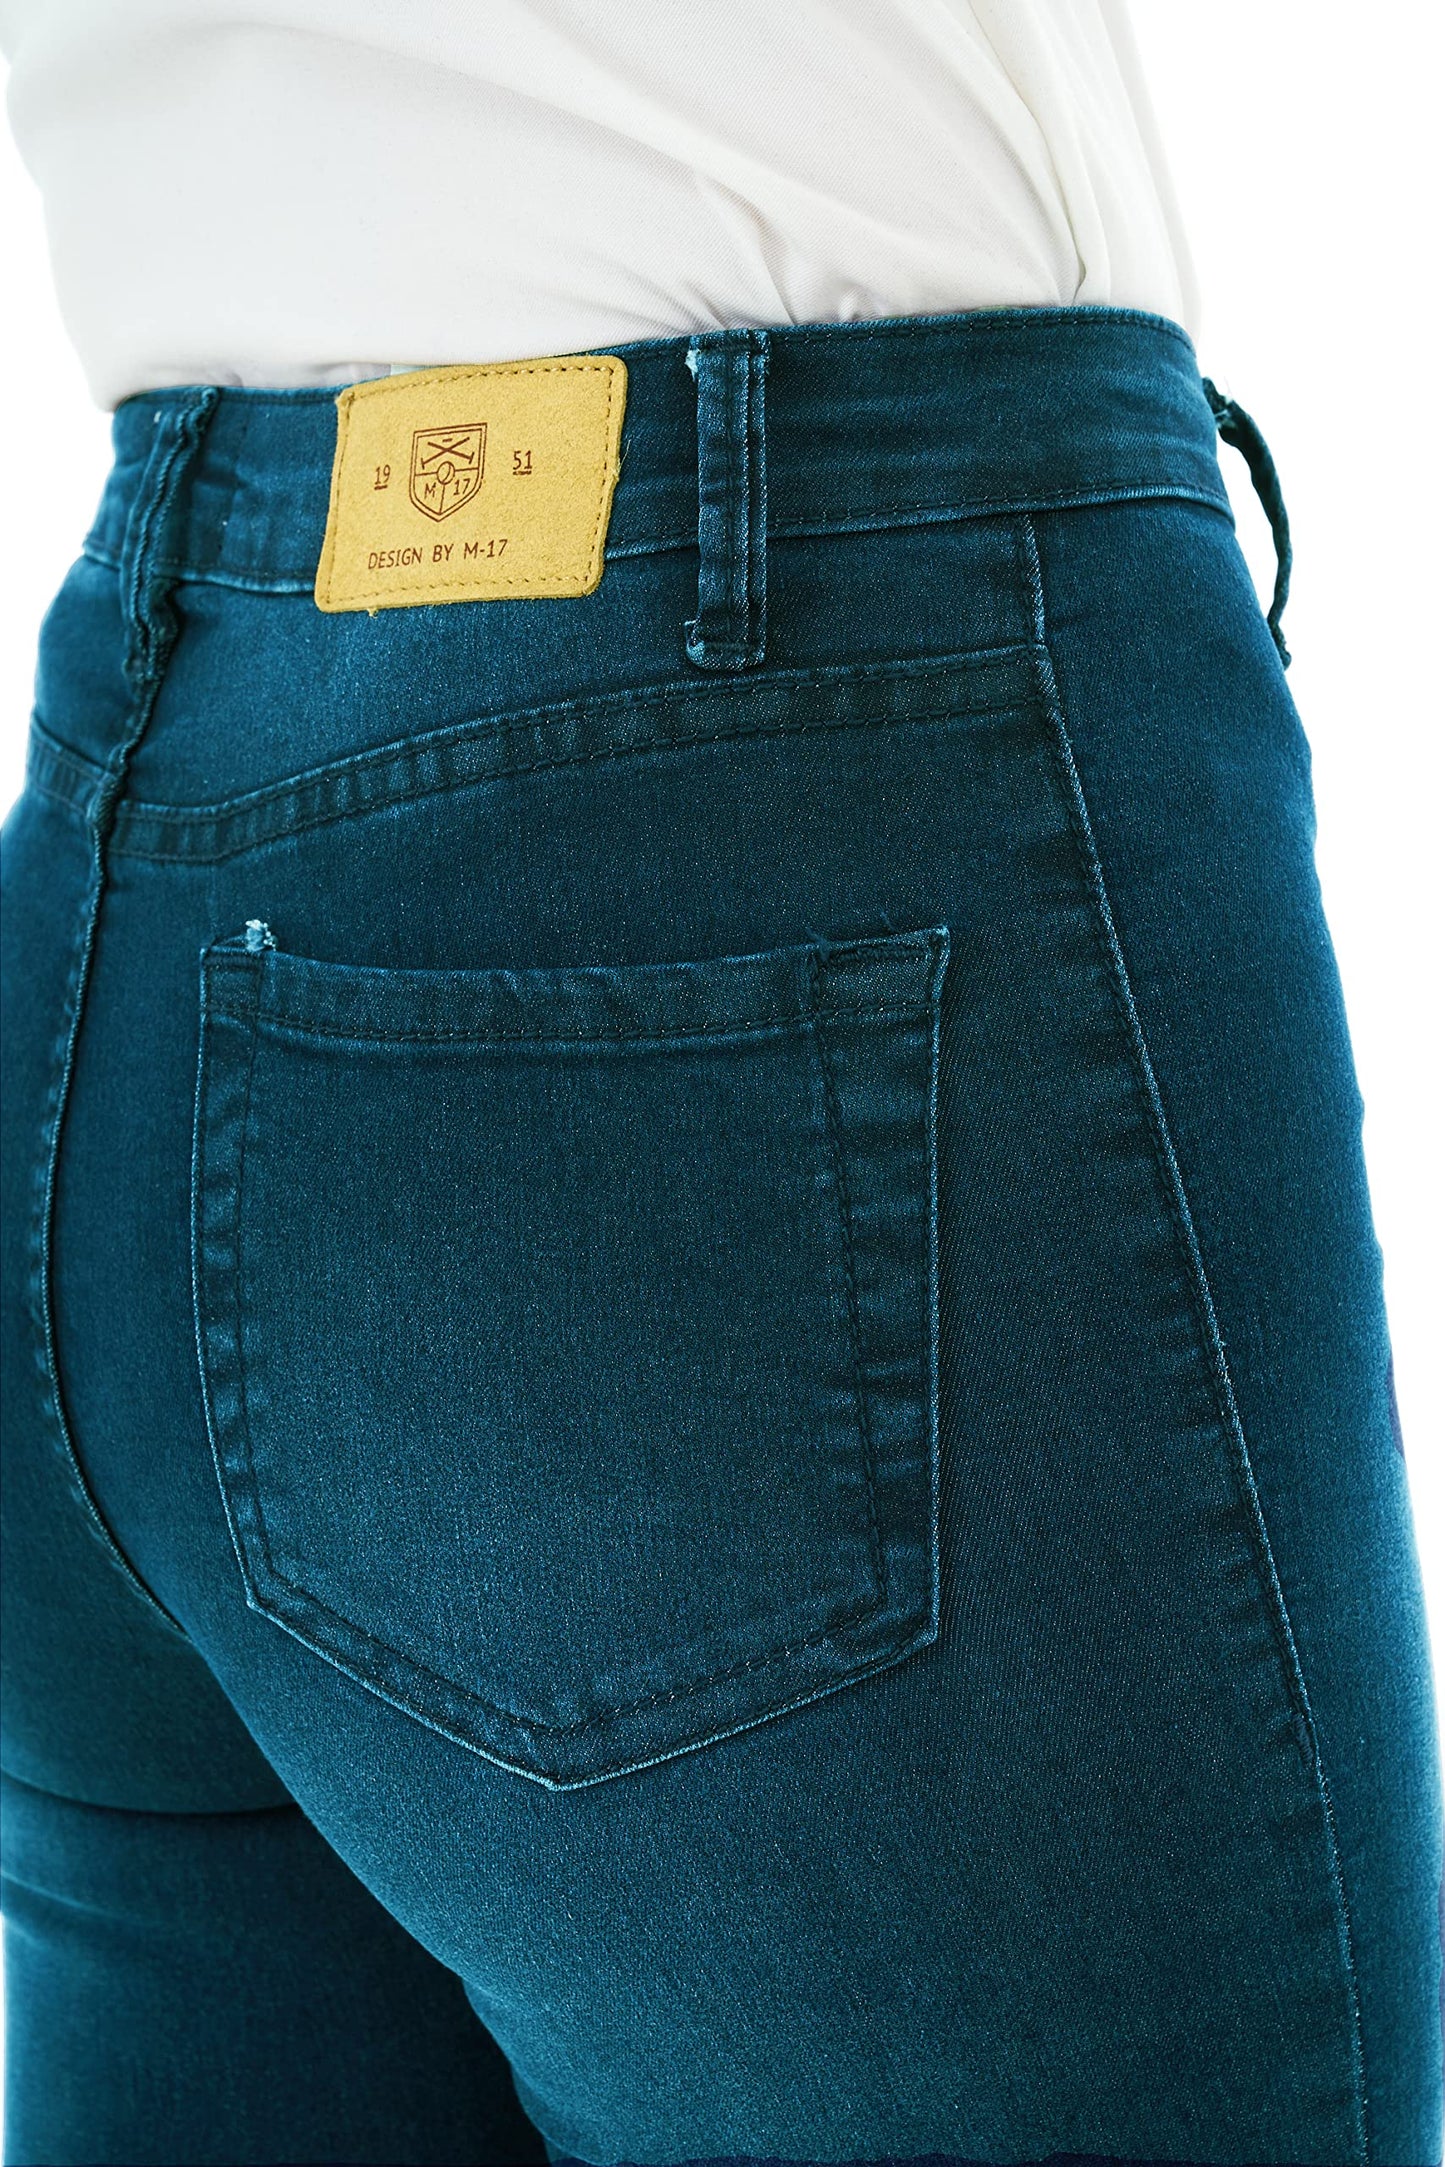 High Waisted, Skinny Fit Jeans - Vintage Blue